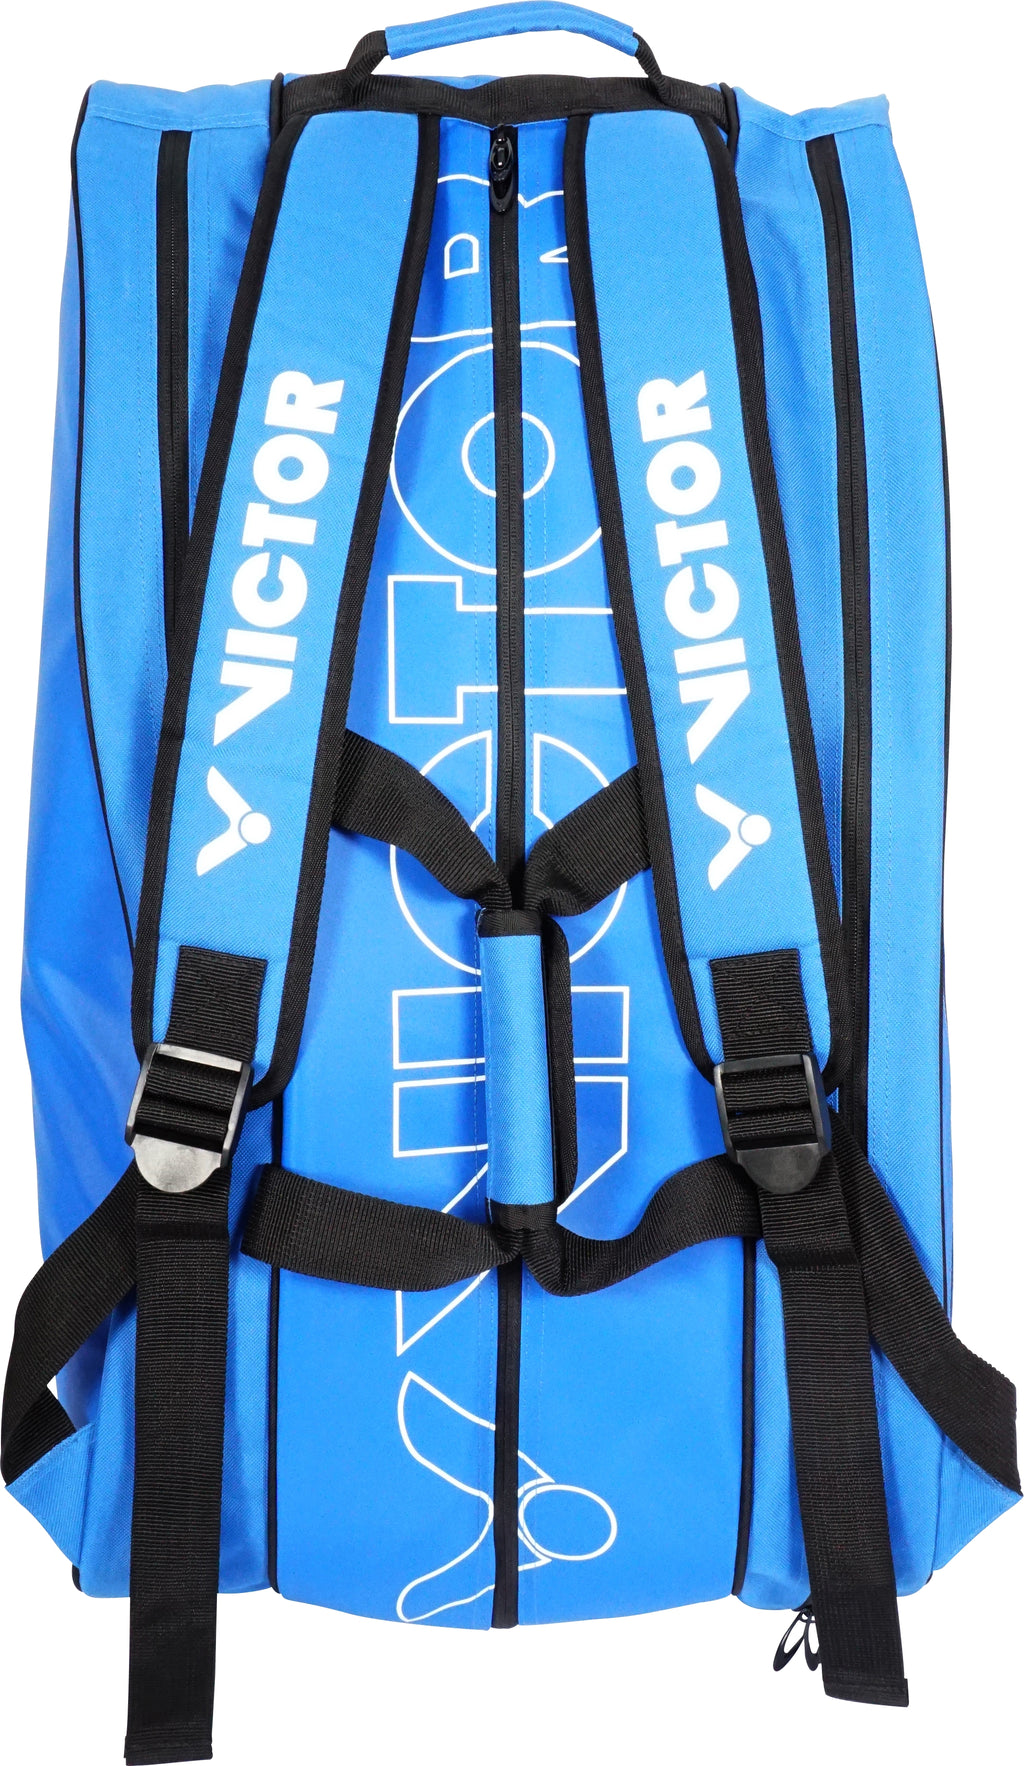 Victor Multi thermo badminton racket bag blue 9031 - badminton racket review